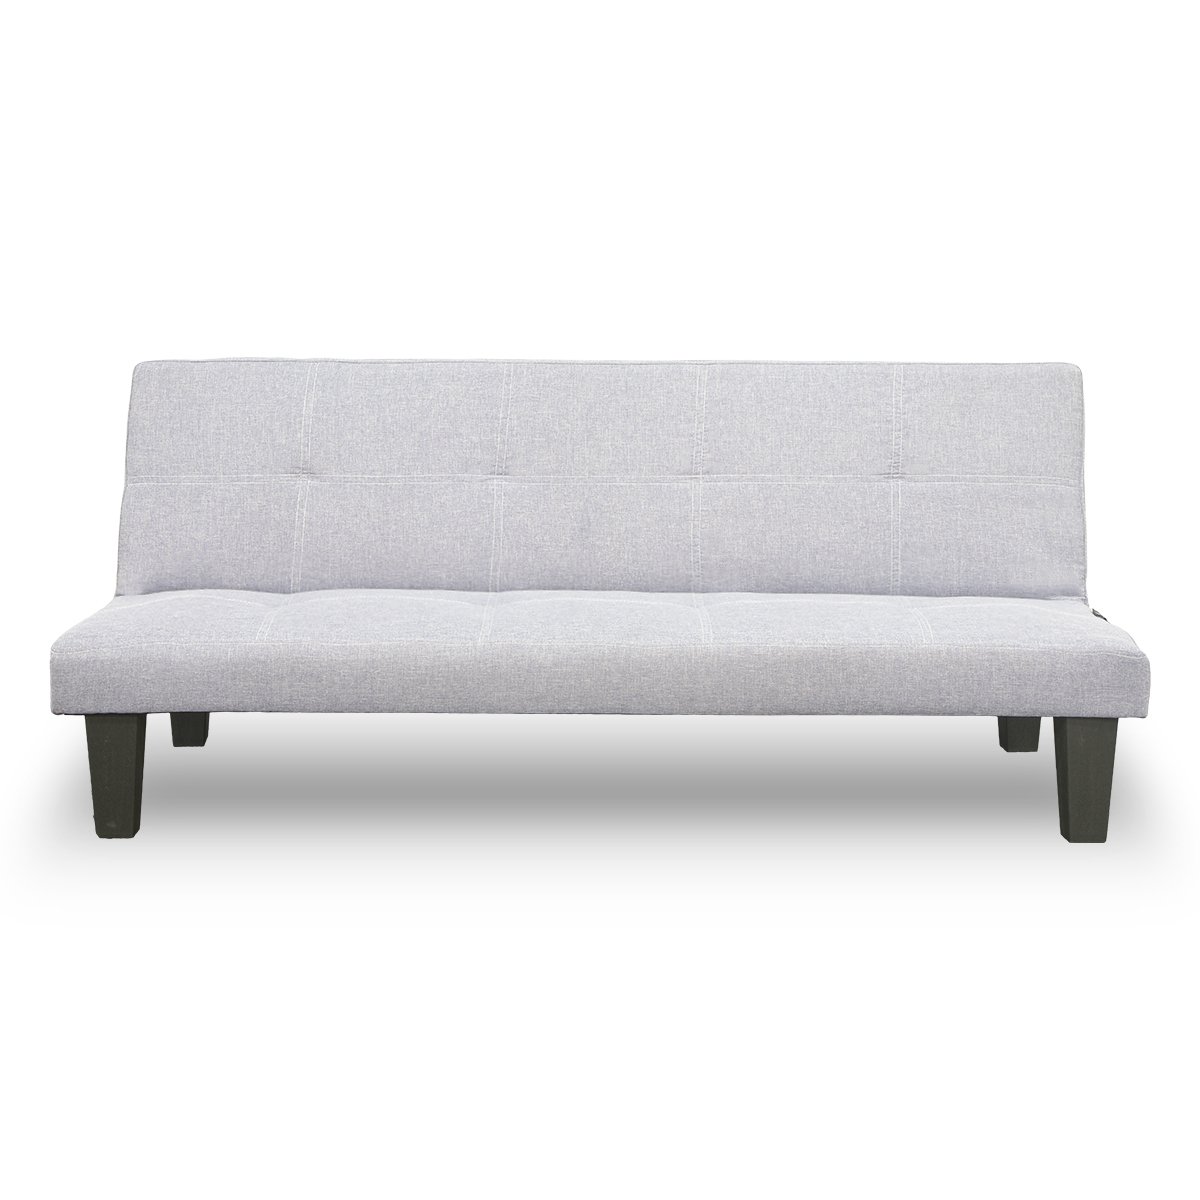 Sarantino 2 Seater Modular Linen Fabric Sofa Bed Couch Light Grey 1